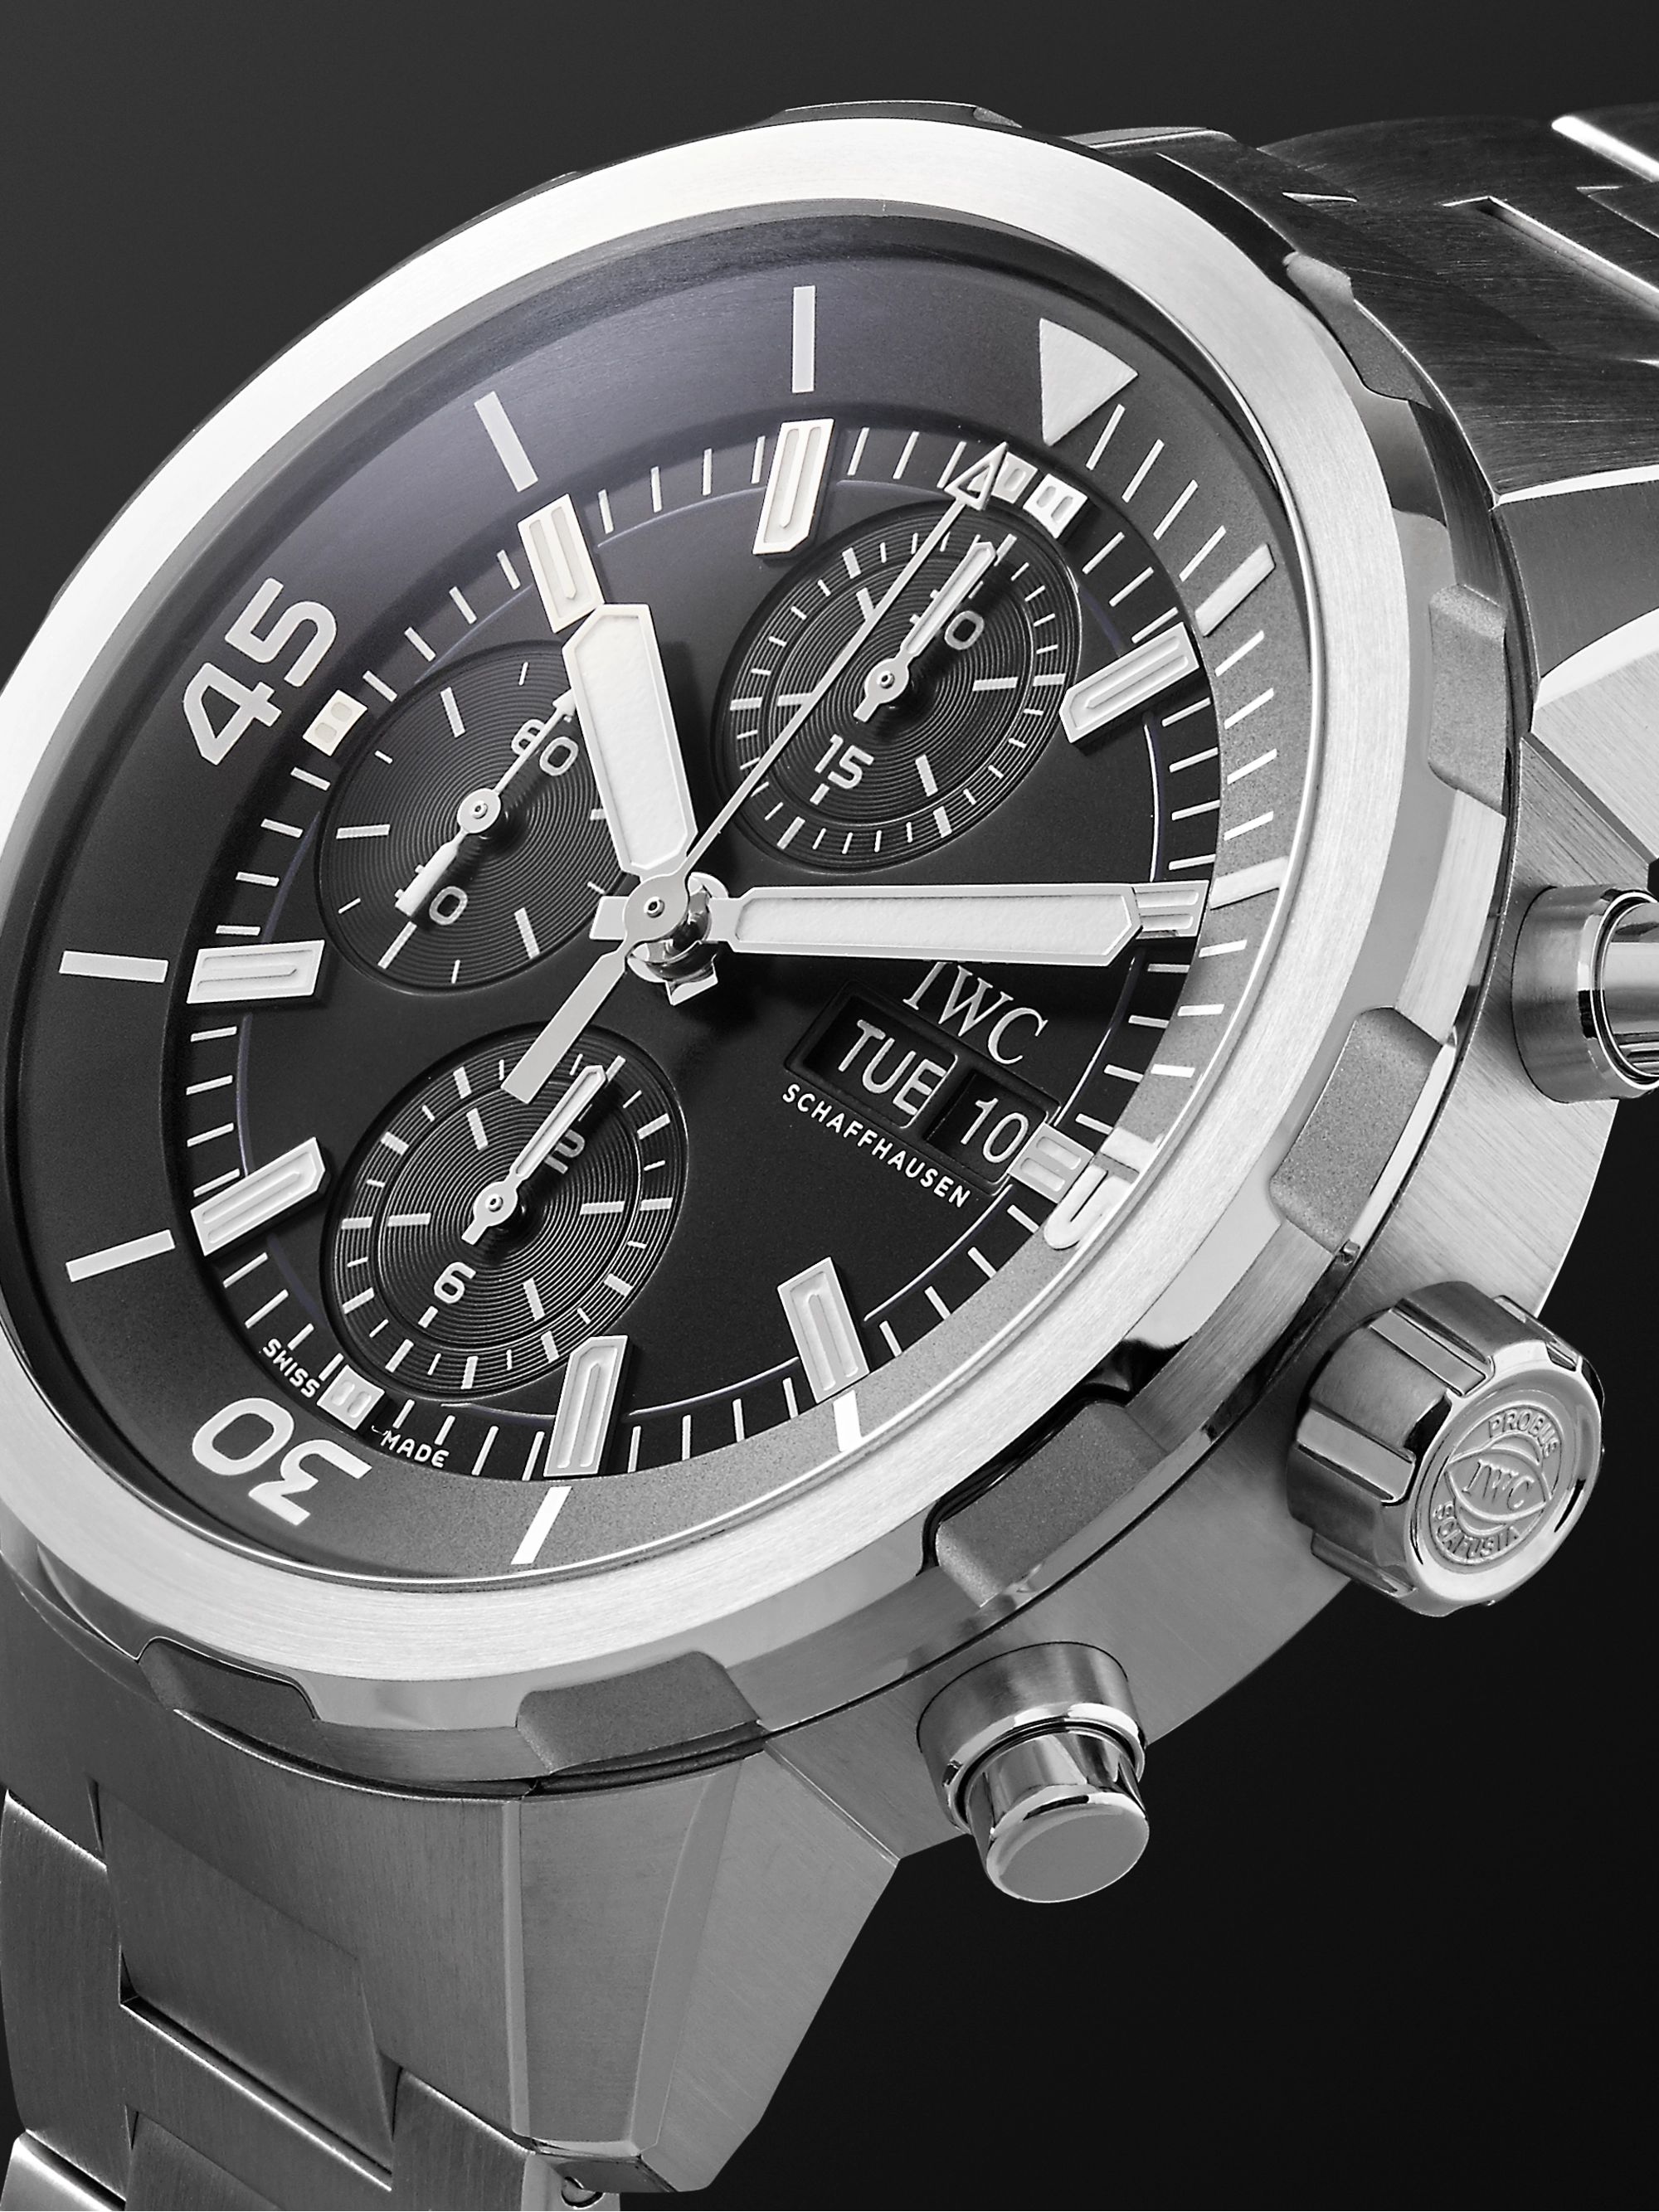 IWC SCHAFFHAUSEN Aquatimer Automatic Chronograph 44mm Stainless Steel Watch, Ref. No. IW376804